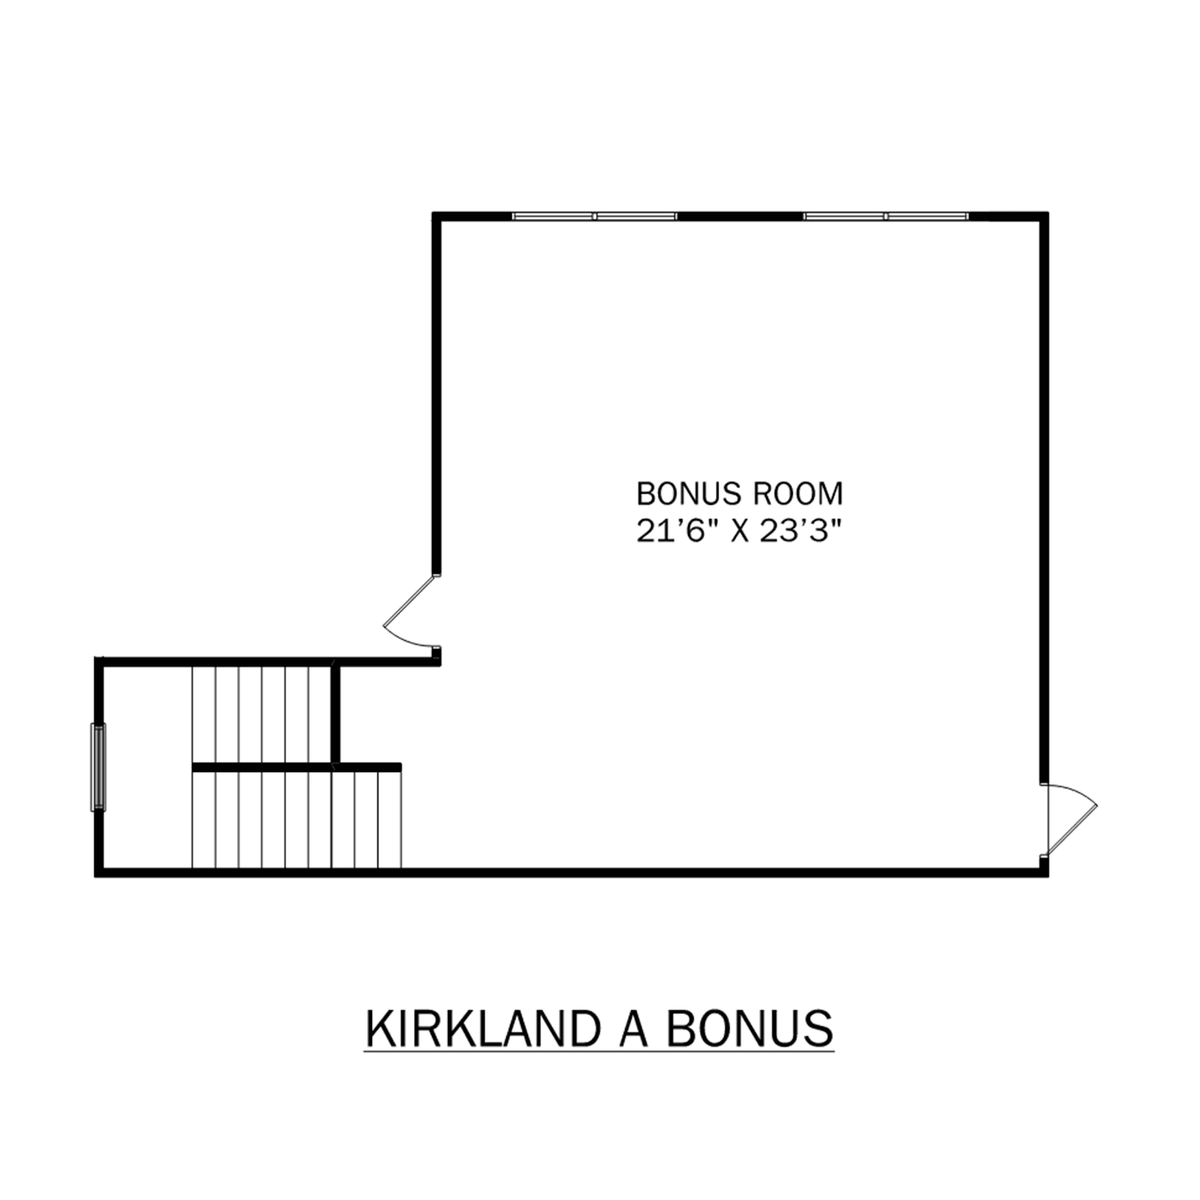 2 - The Kirkland with Bonus buildable floor plan layout in Davidson Homes' Pikes Ridge community.